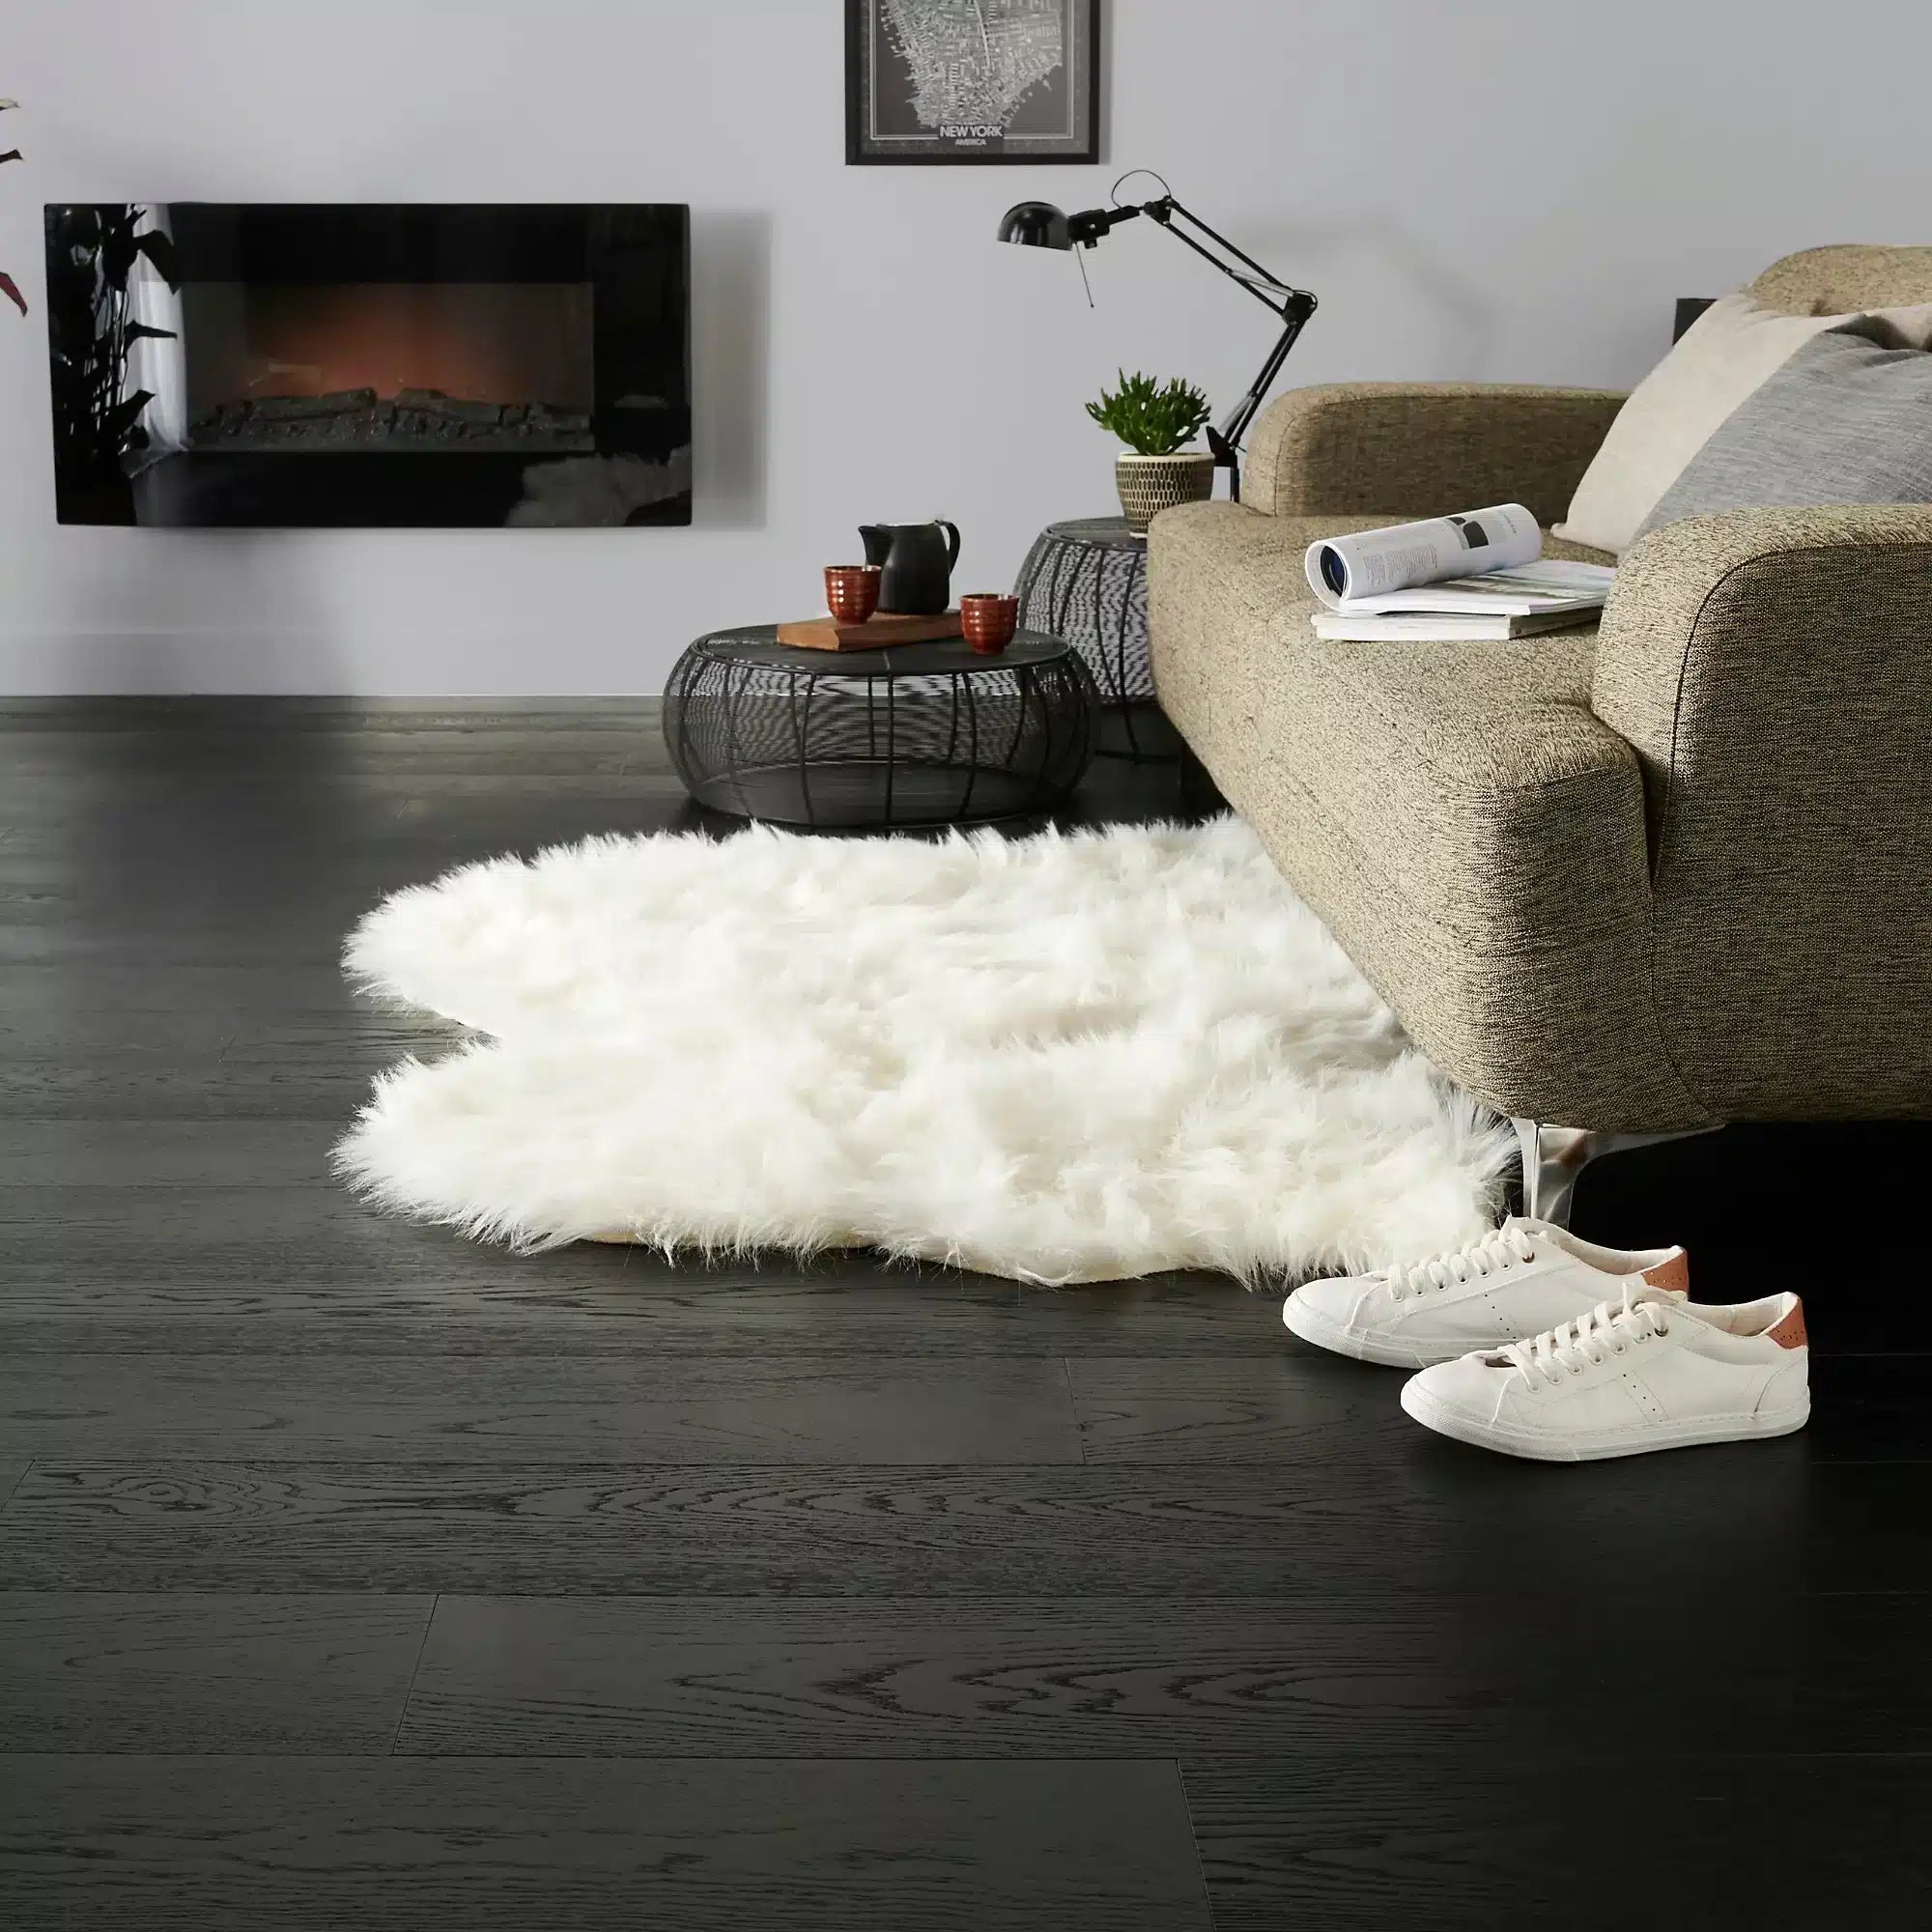 GoodHome - Herringbone Black Oak Real wood top layer flooring, 1.94m² Pack 7250